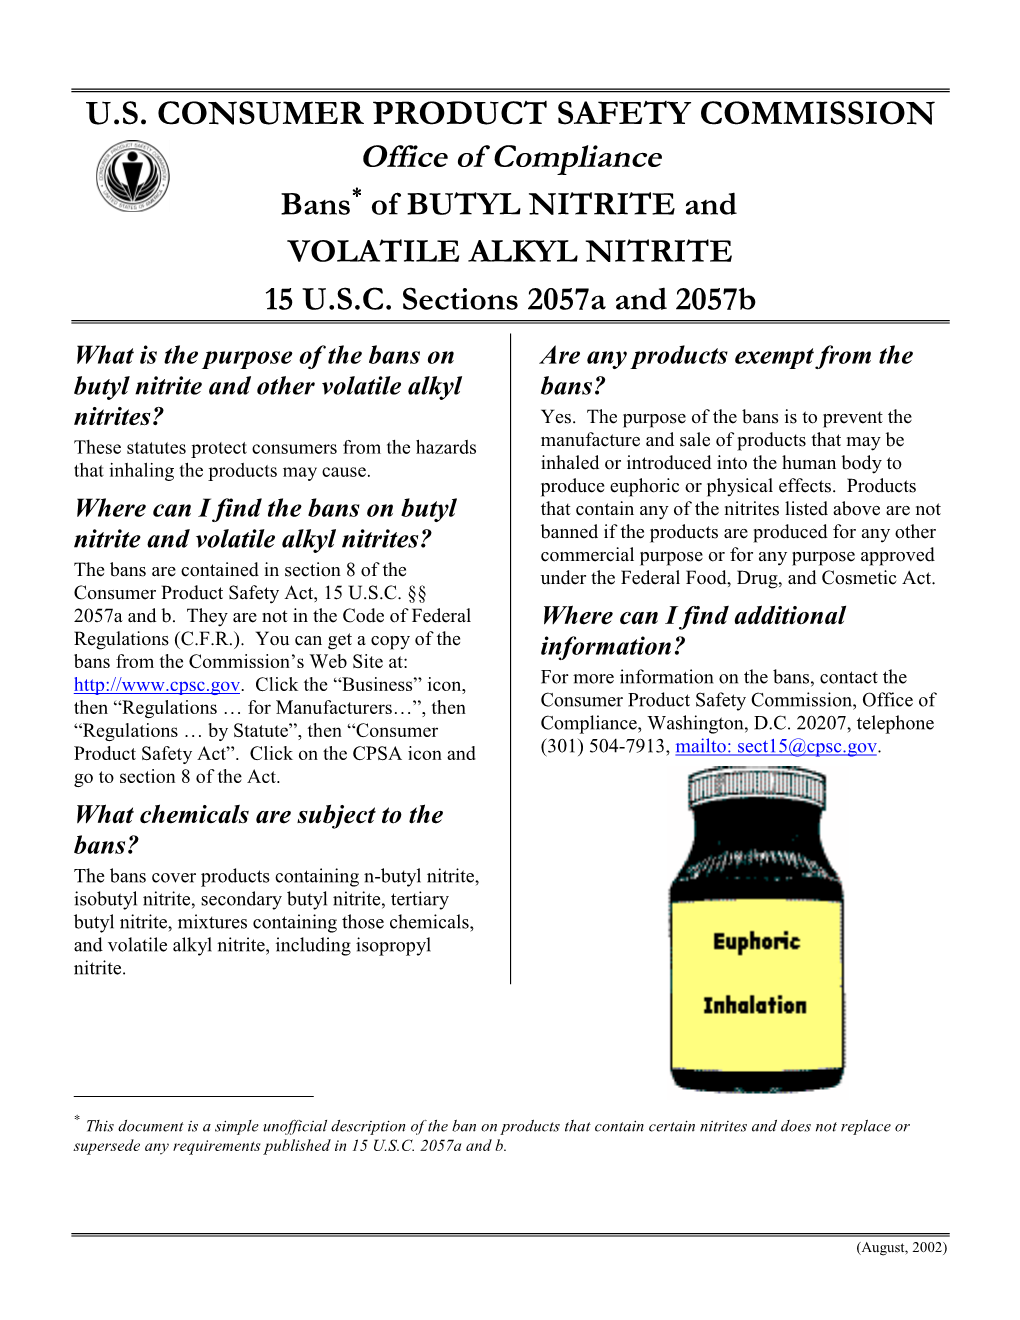 Bans of BUTYL NITRITE and VOLATILE ALKYL NITRITE 15 U.S.C